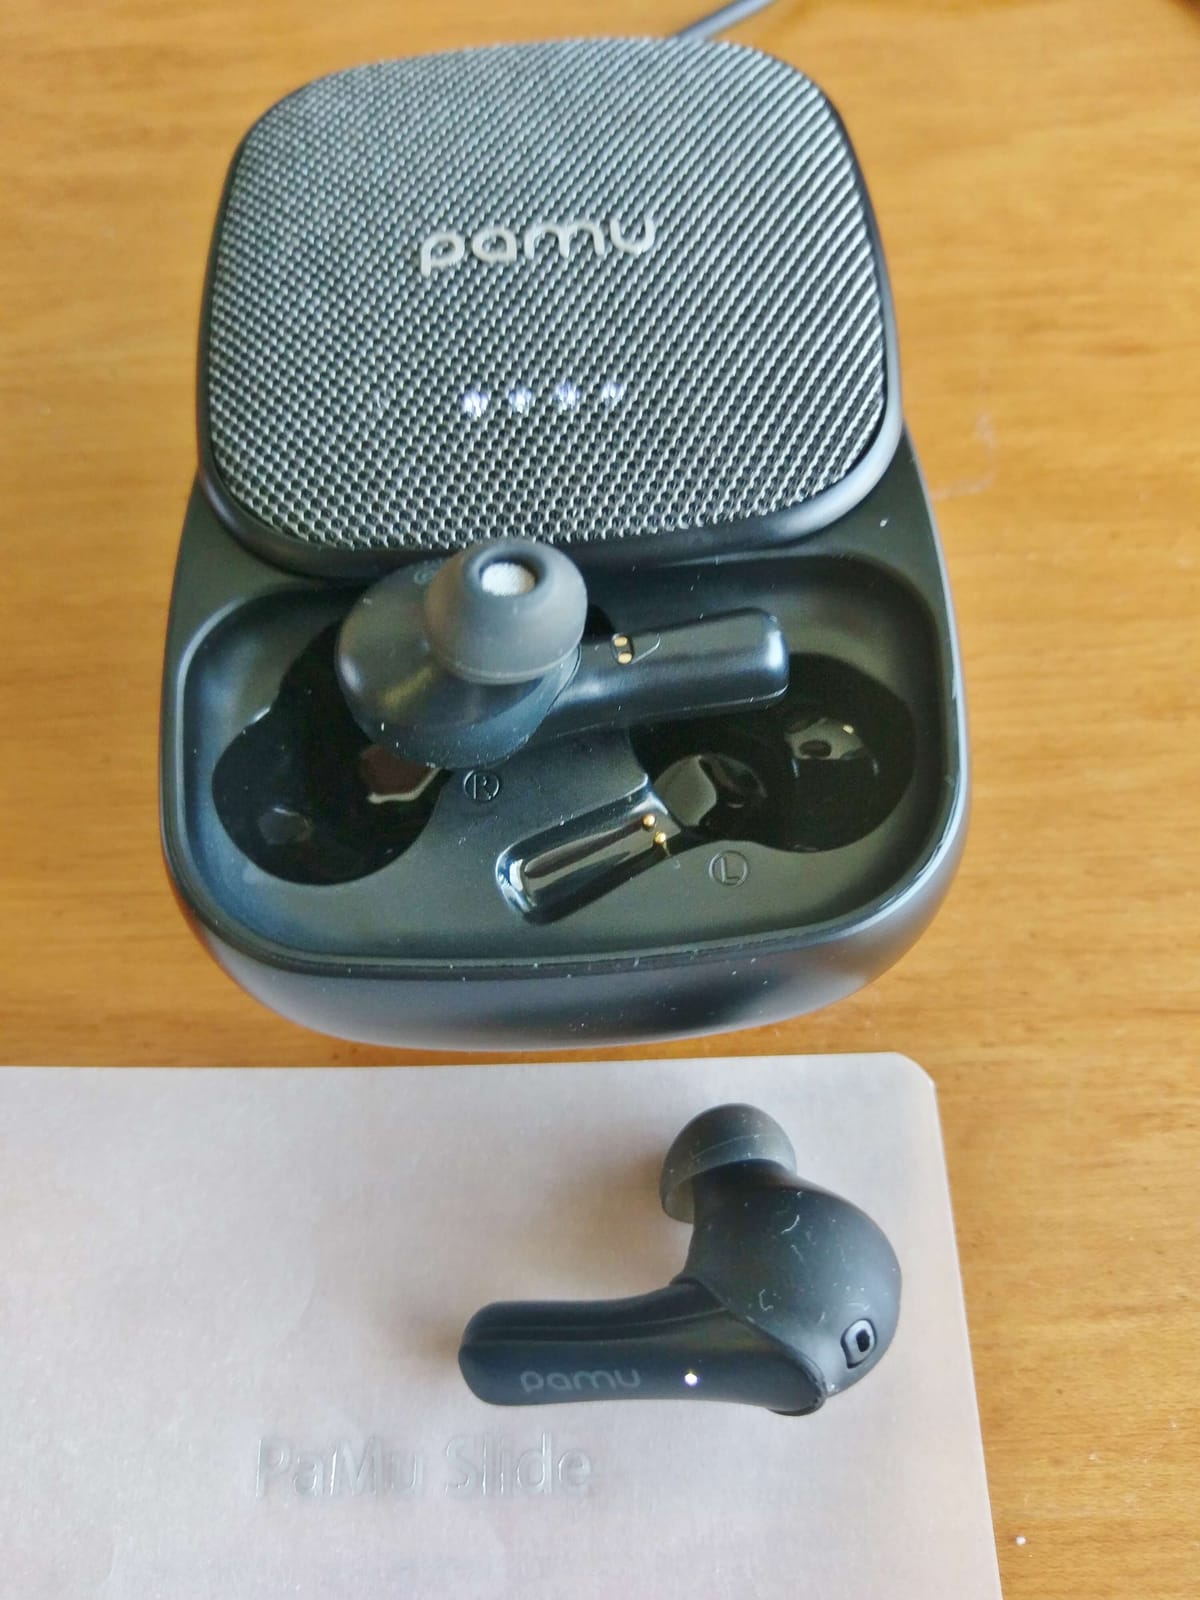 PaMu Slide Wireless Earbud Headphones - Lifestyle Audio Accessories Review